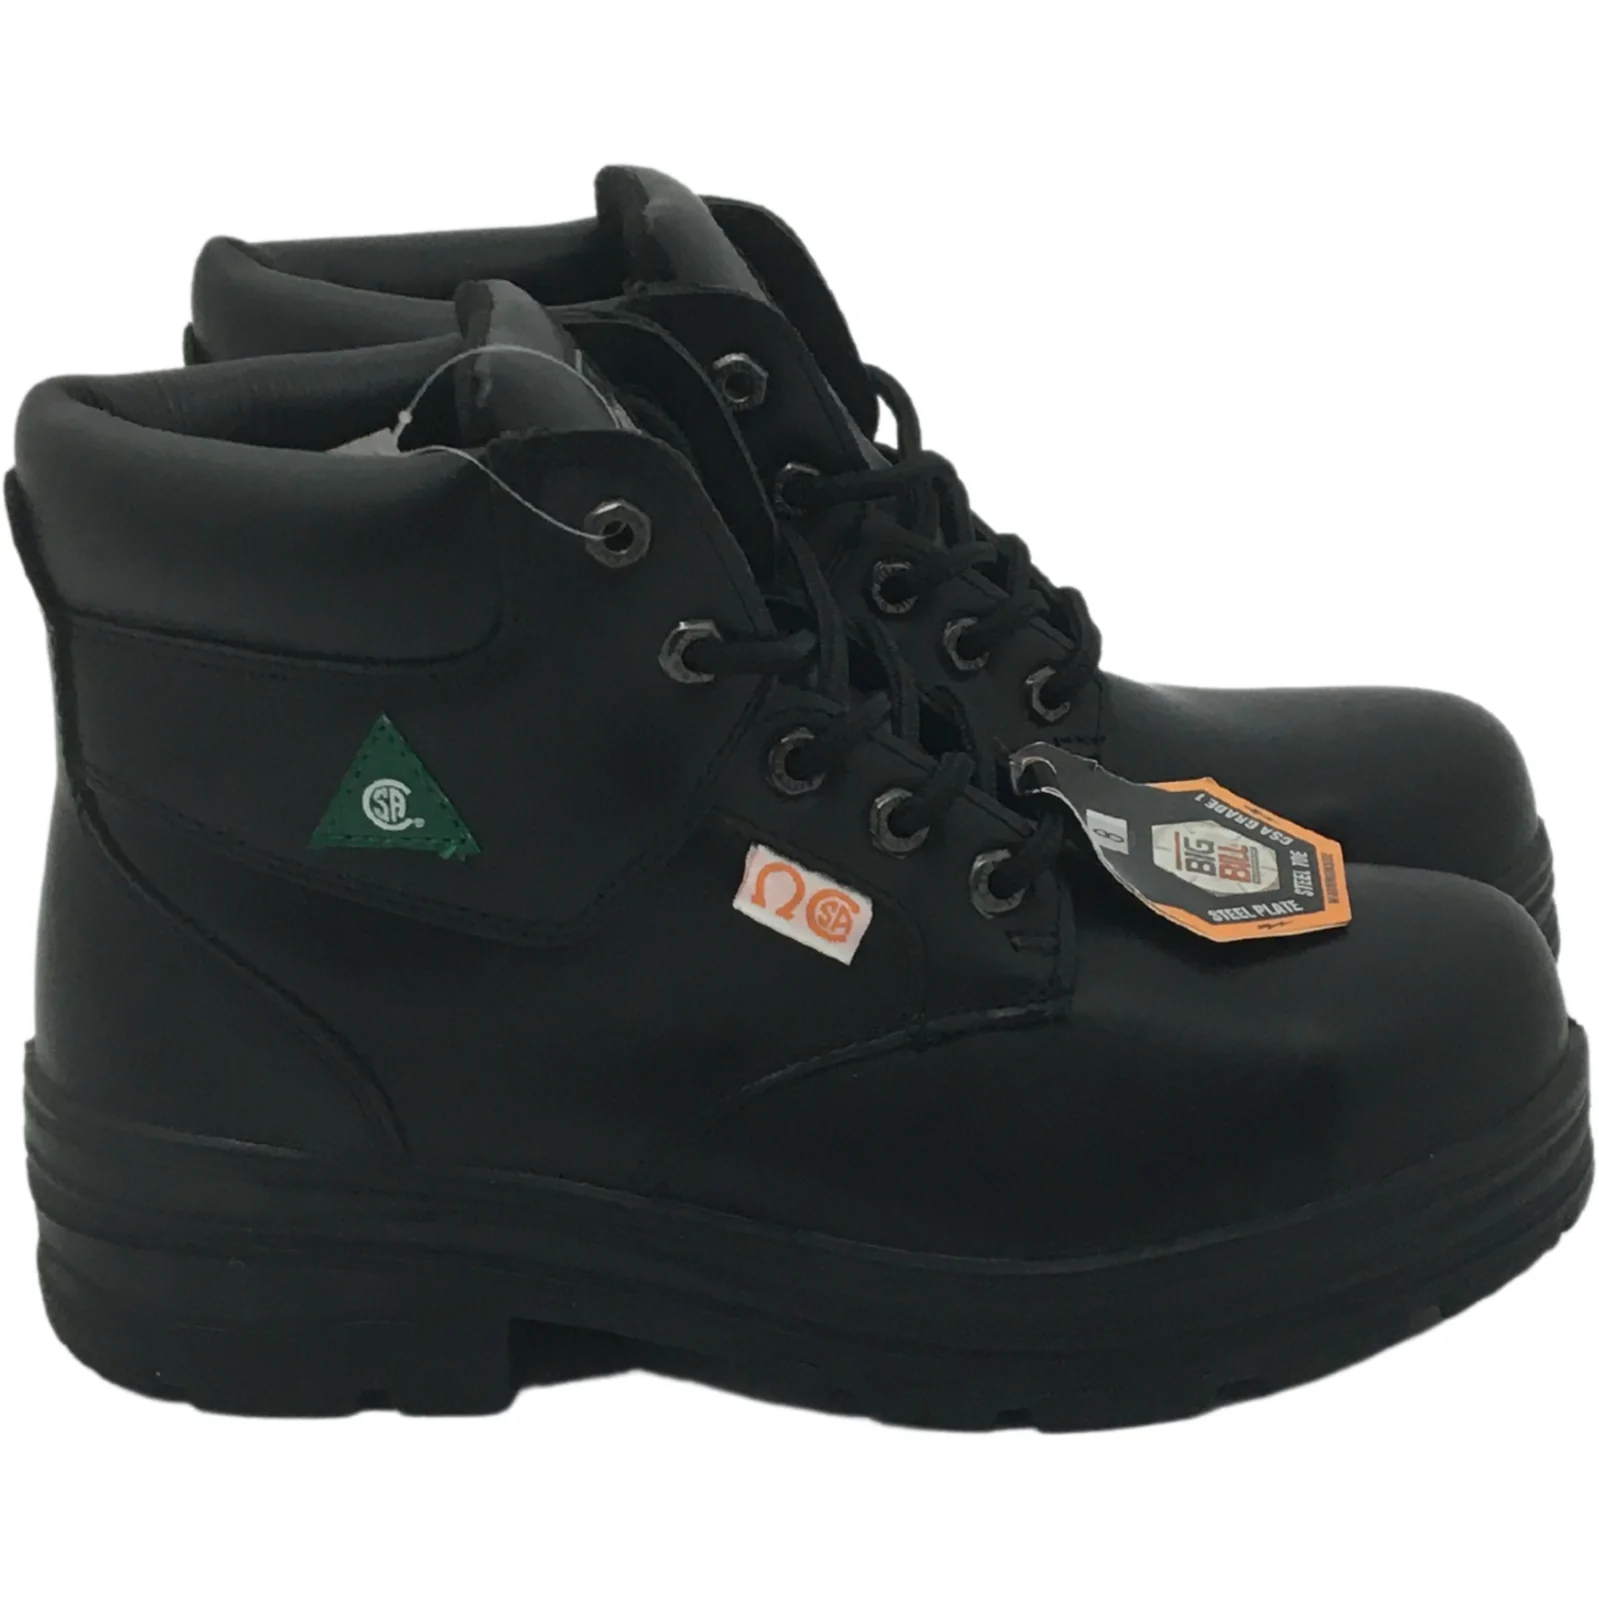 Big Bill Footwear Men's Safety Boots / Work Boots / BB 3000 / Black / Size 8